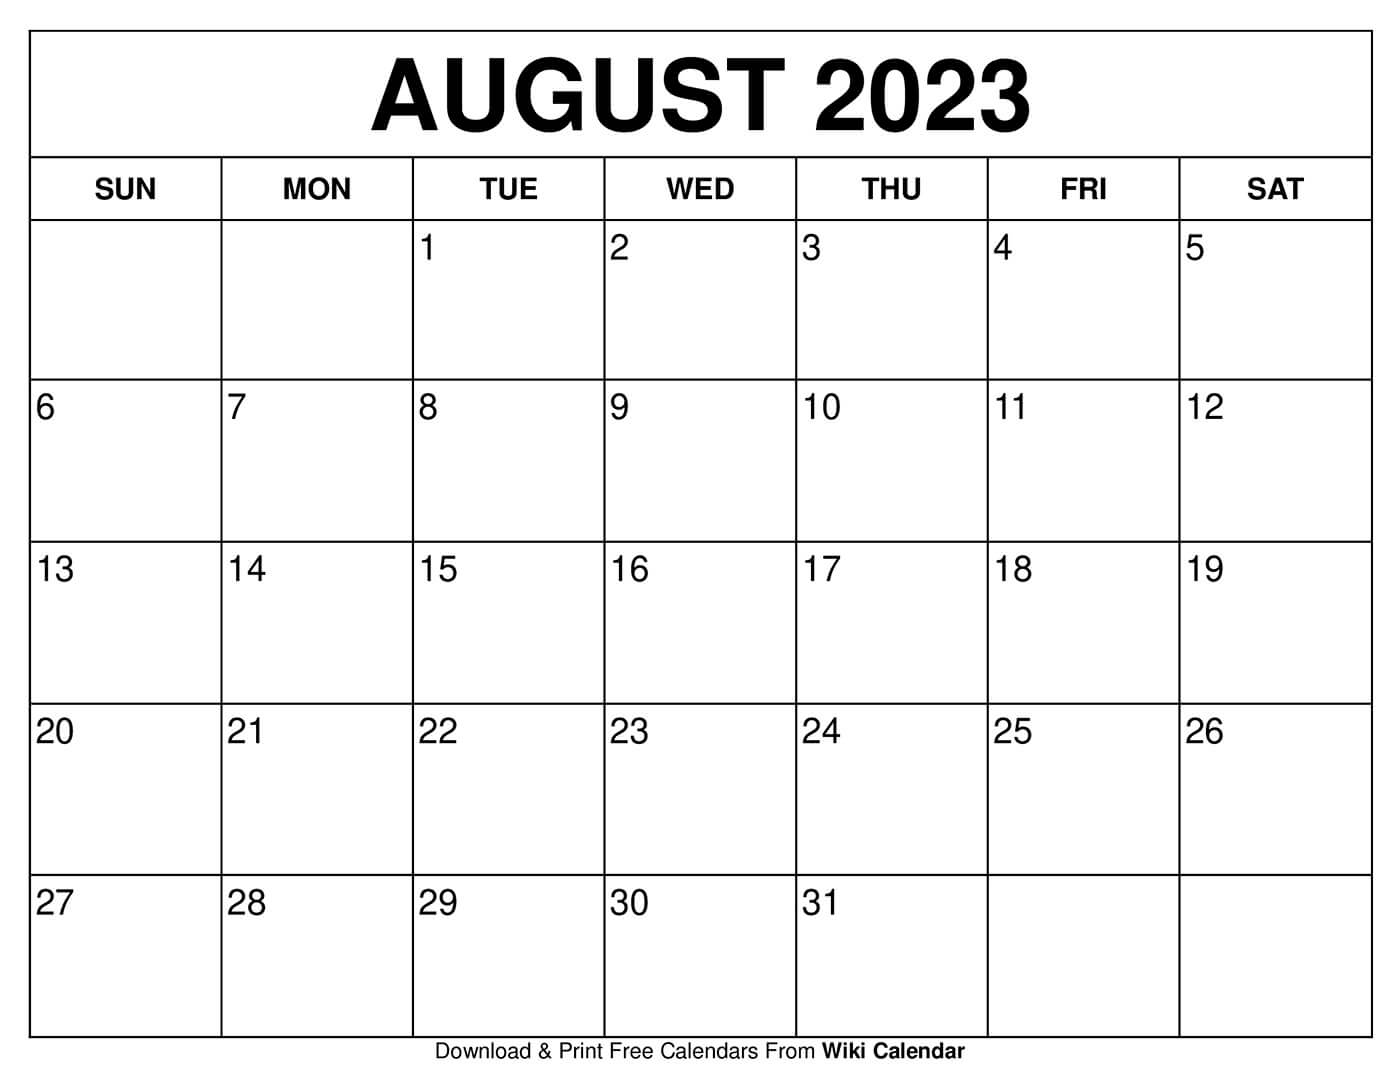 June July August 2022 Calendar Free Printable August 2022 Calendars - Wiki Calendar